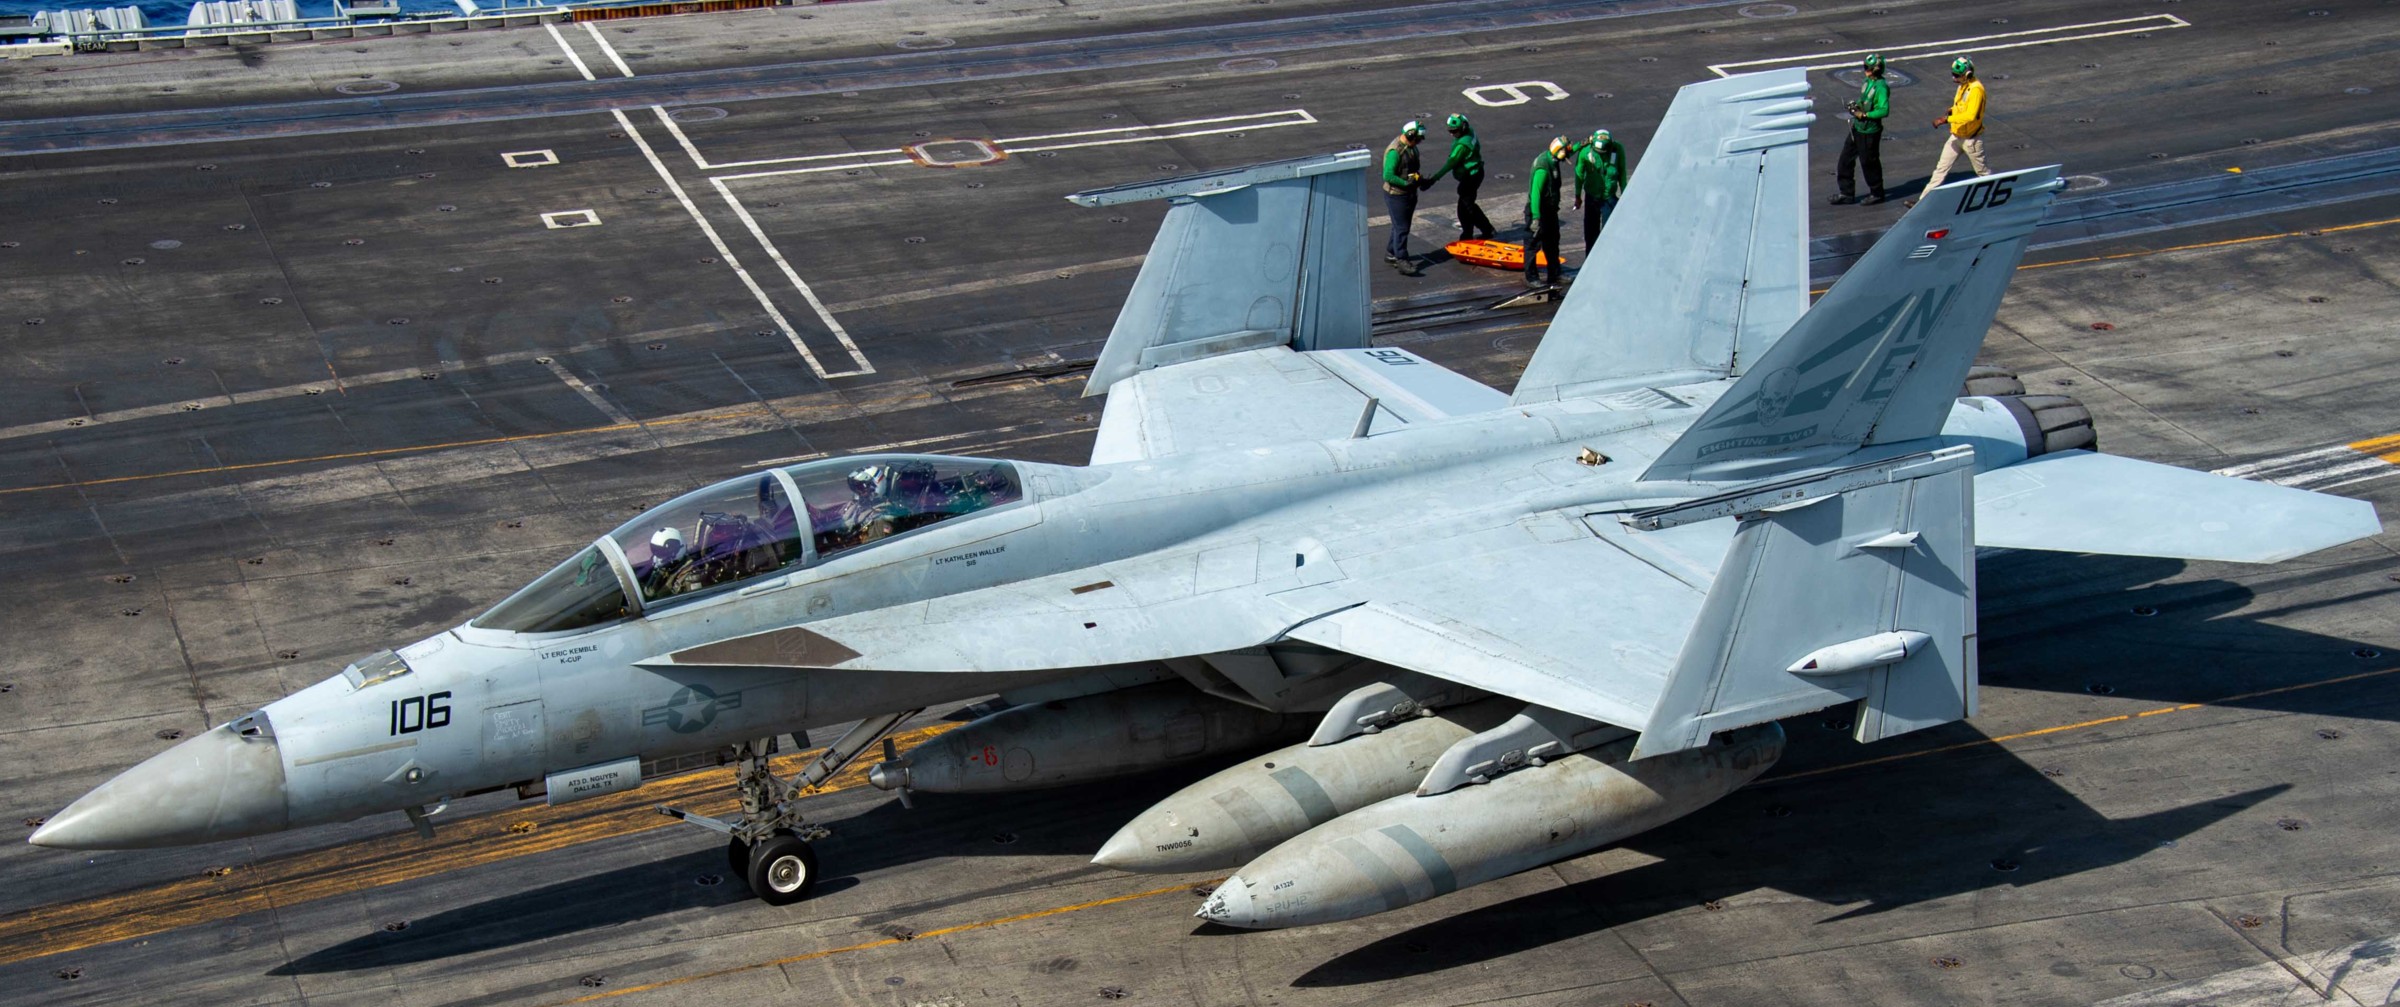 vfa-2 bounty hunters strike fighter squadron us navy f/a-18f super hornet carrier air wing cvw-2 uss carl vinson cvn-70 101